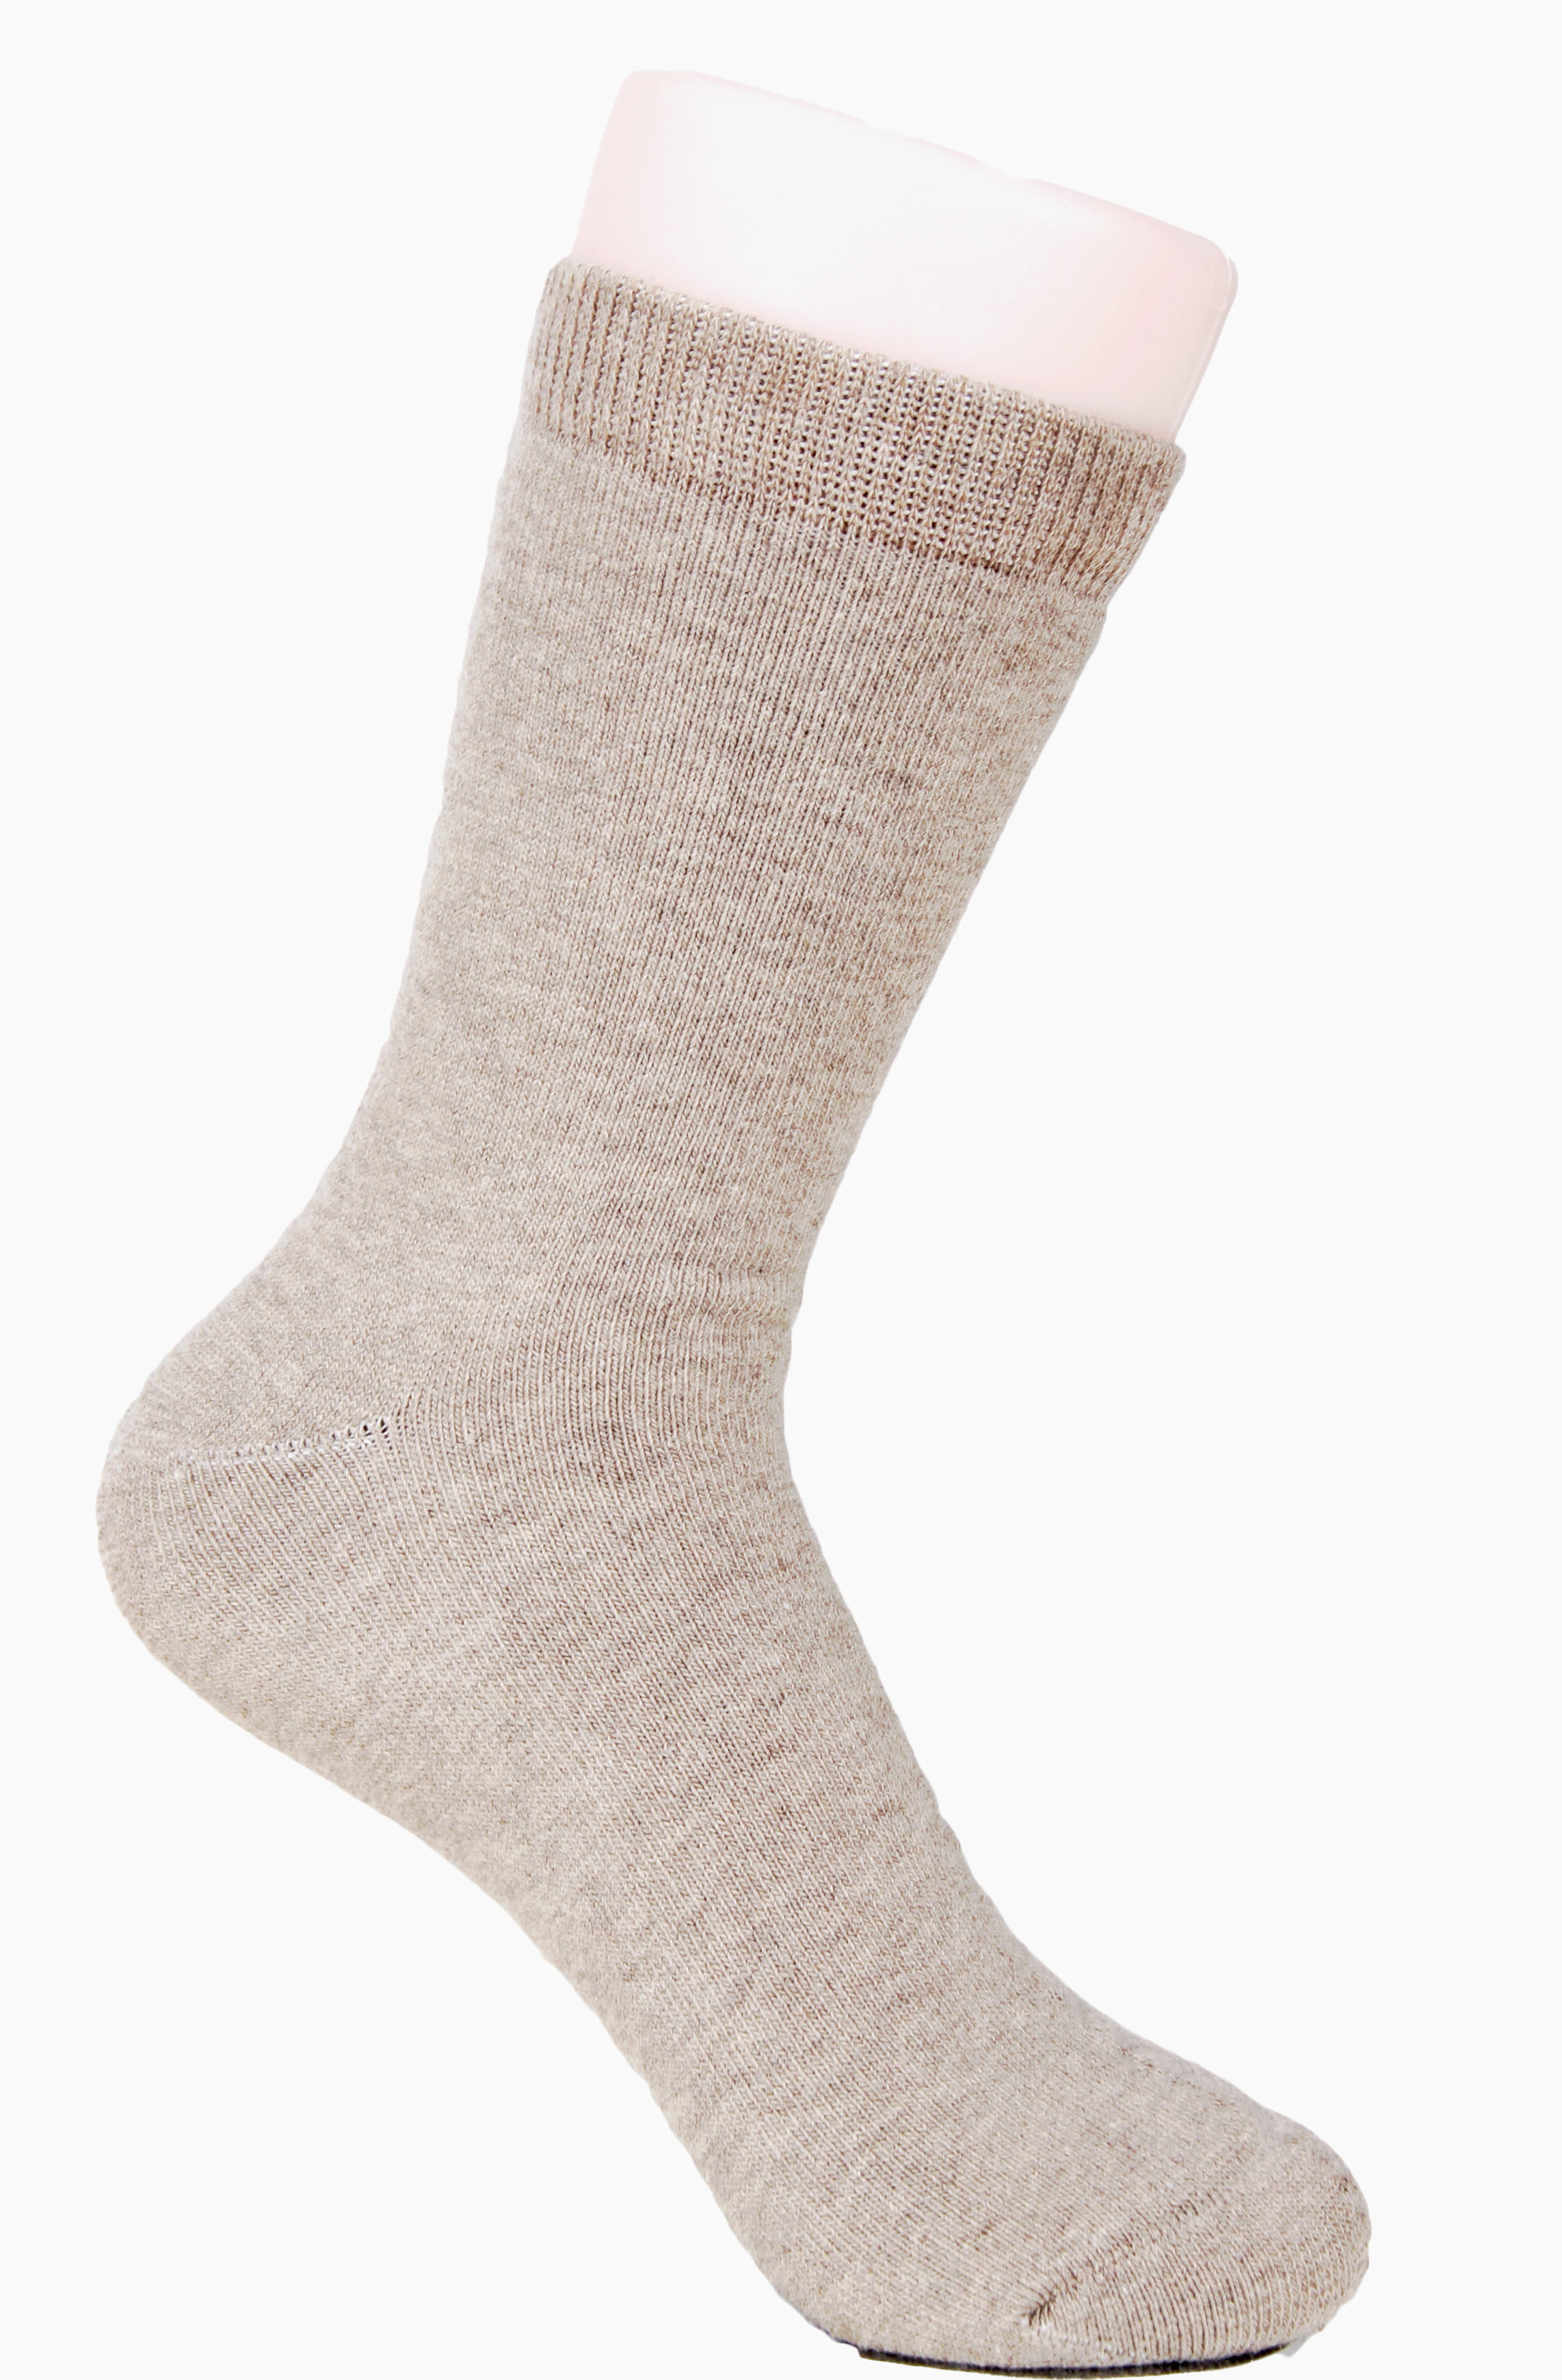 Lian LifeStyle Mens 3 Pairs Thick Wool Blend Crew Socks Diamond Size 7-9